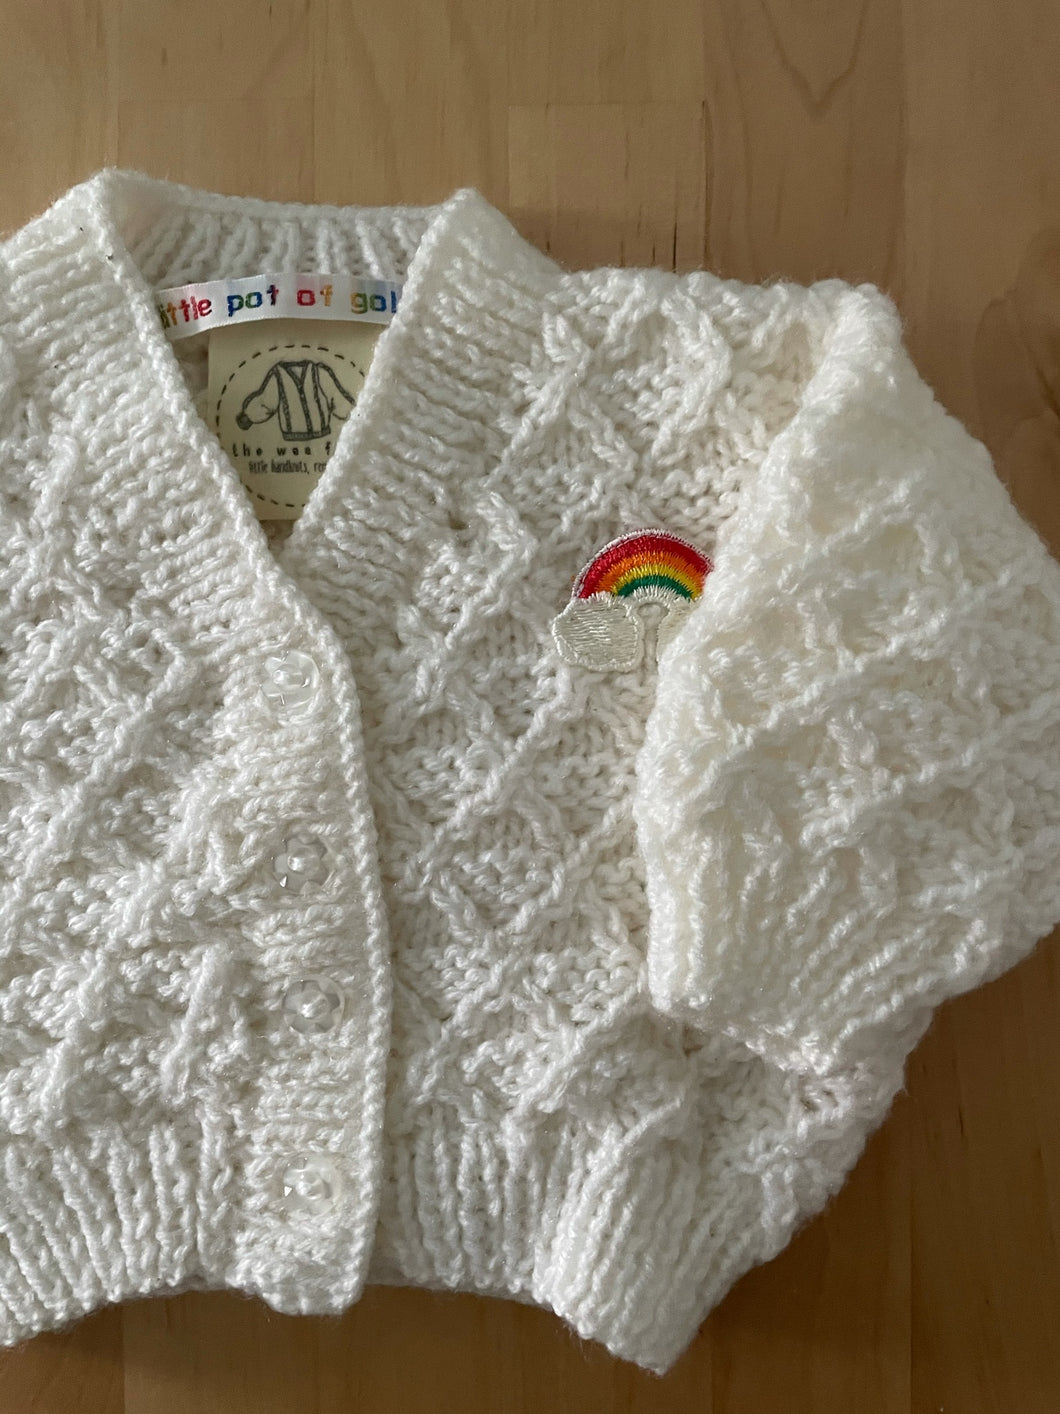 0-3 months - White textured rainbow slouchy cardigan